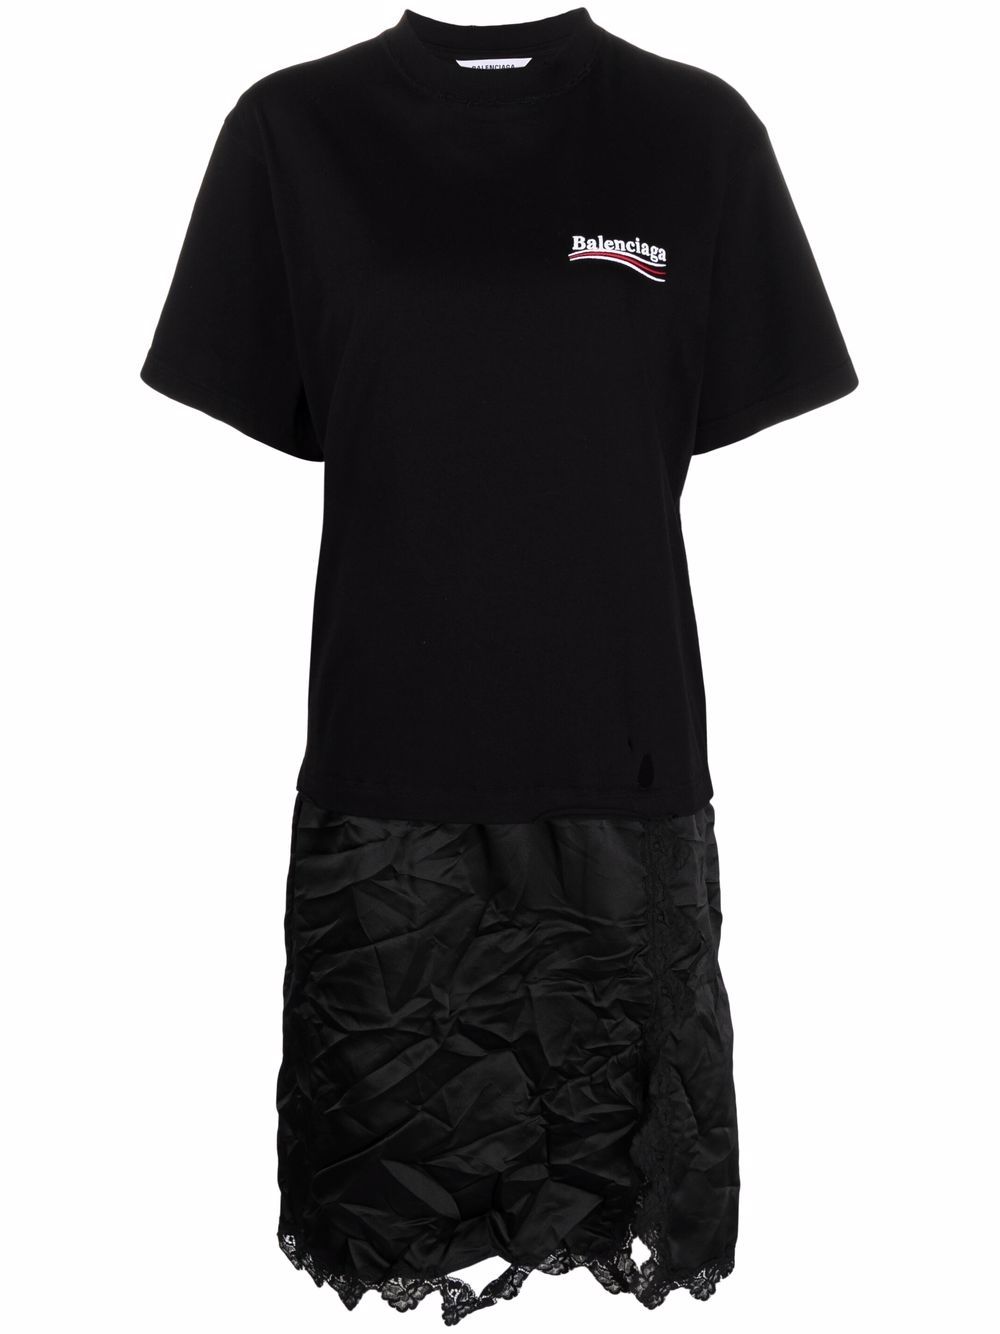 Balenciaga T-shirt slip dress - Black